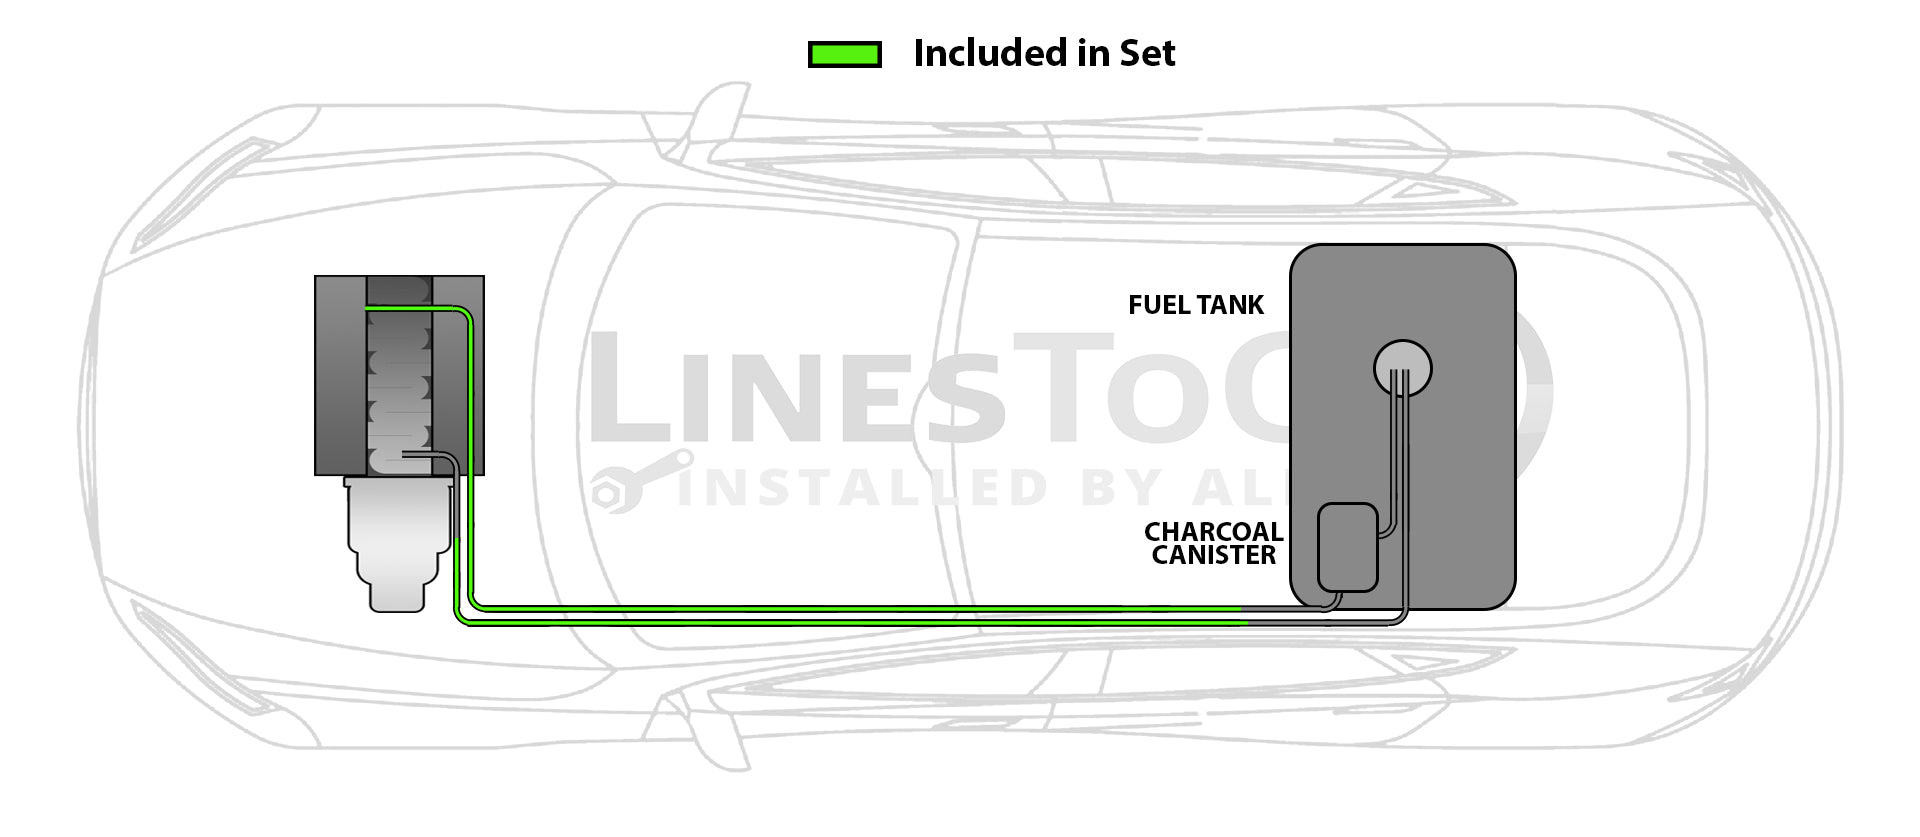 Buick LaCrosse Base Fuel Line Set 2009 3.8L FL252-B9F